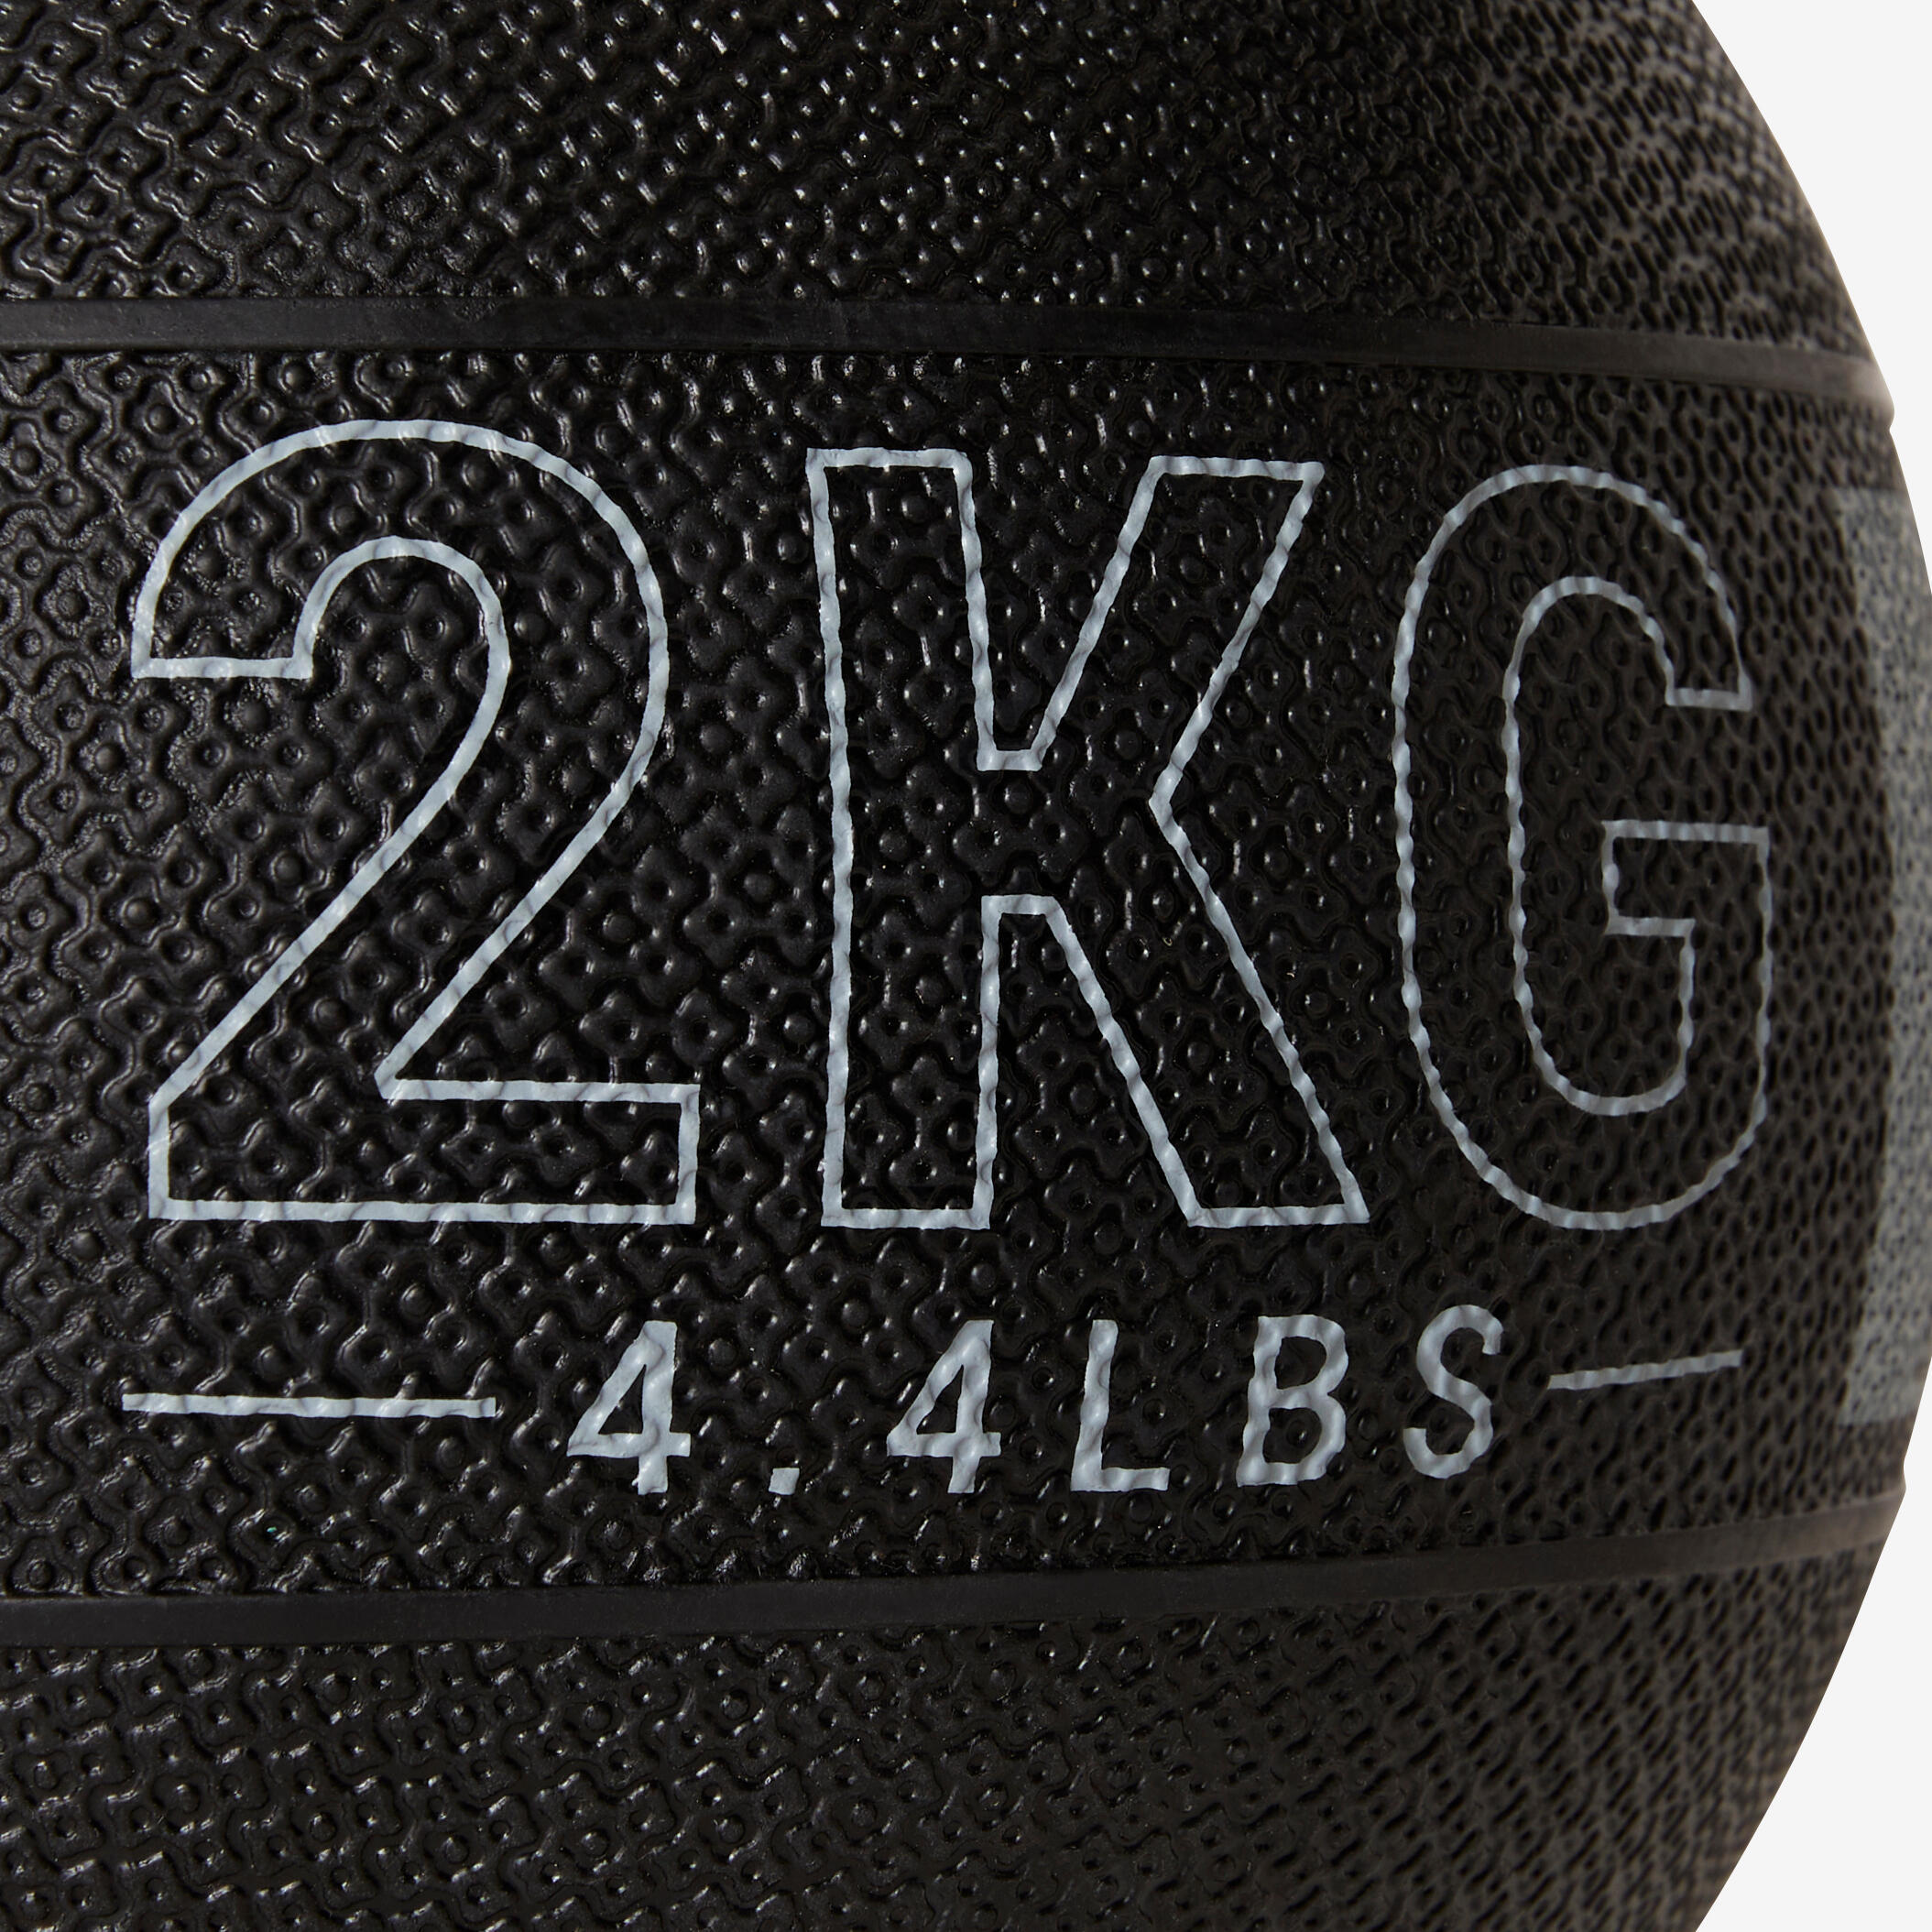 2 kg Rubber Medicine Ball - Black/Grey 3/4